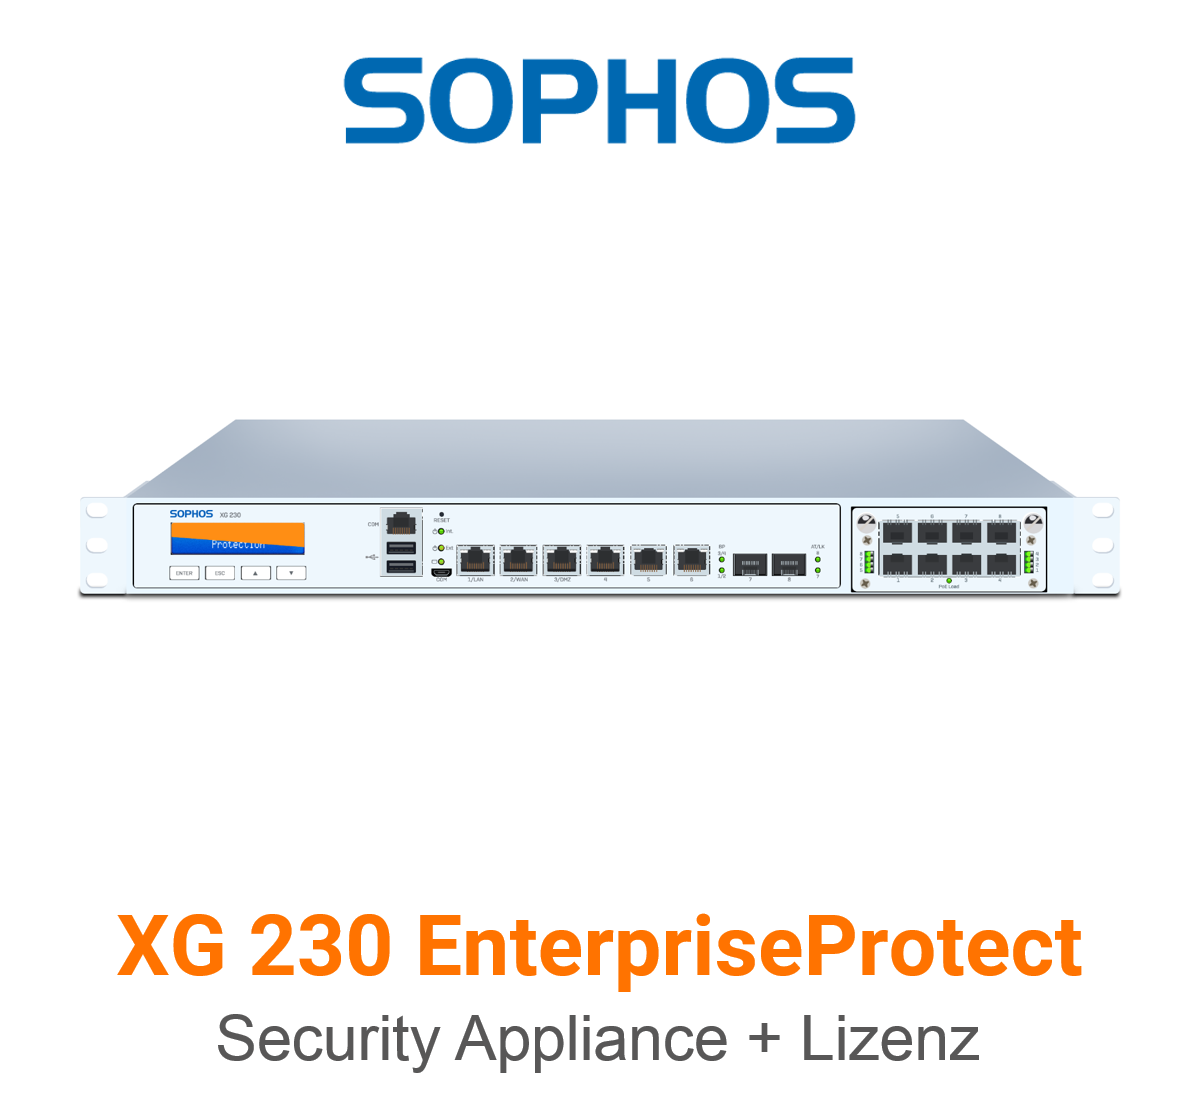 Sophos XG 230 EnterpriseProtect Bundle (Hardware + Lizenz) (End of Sale/Life)